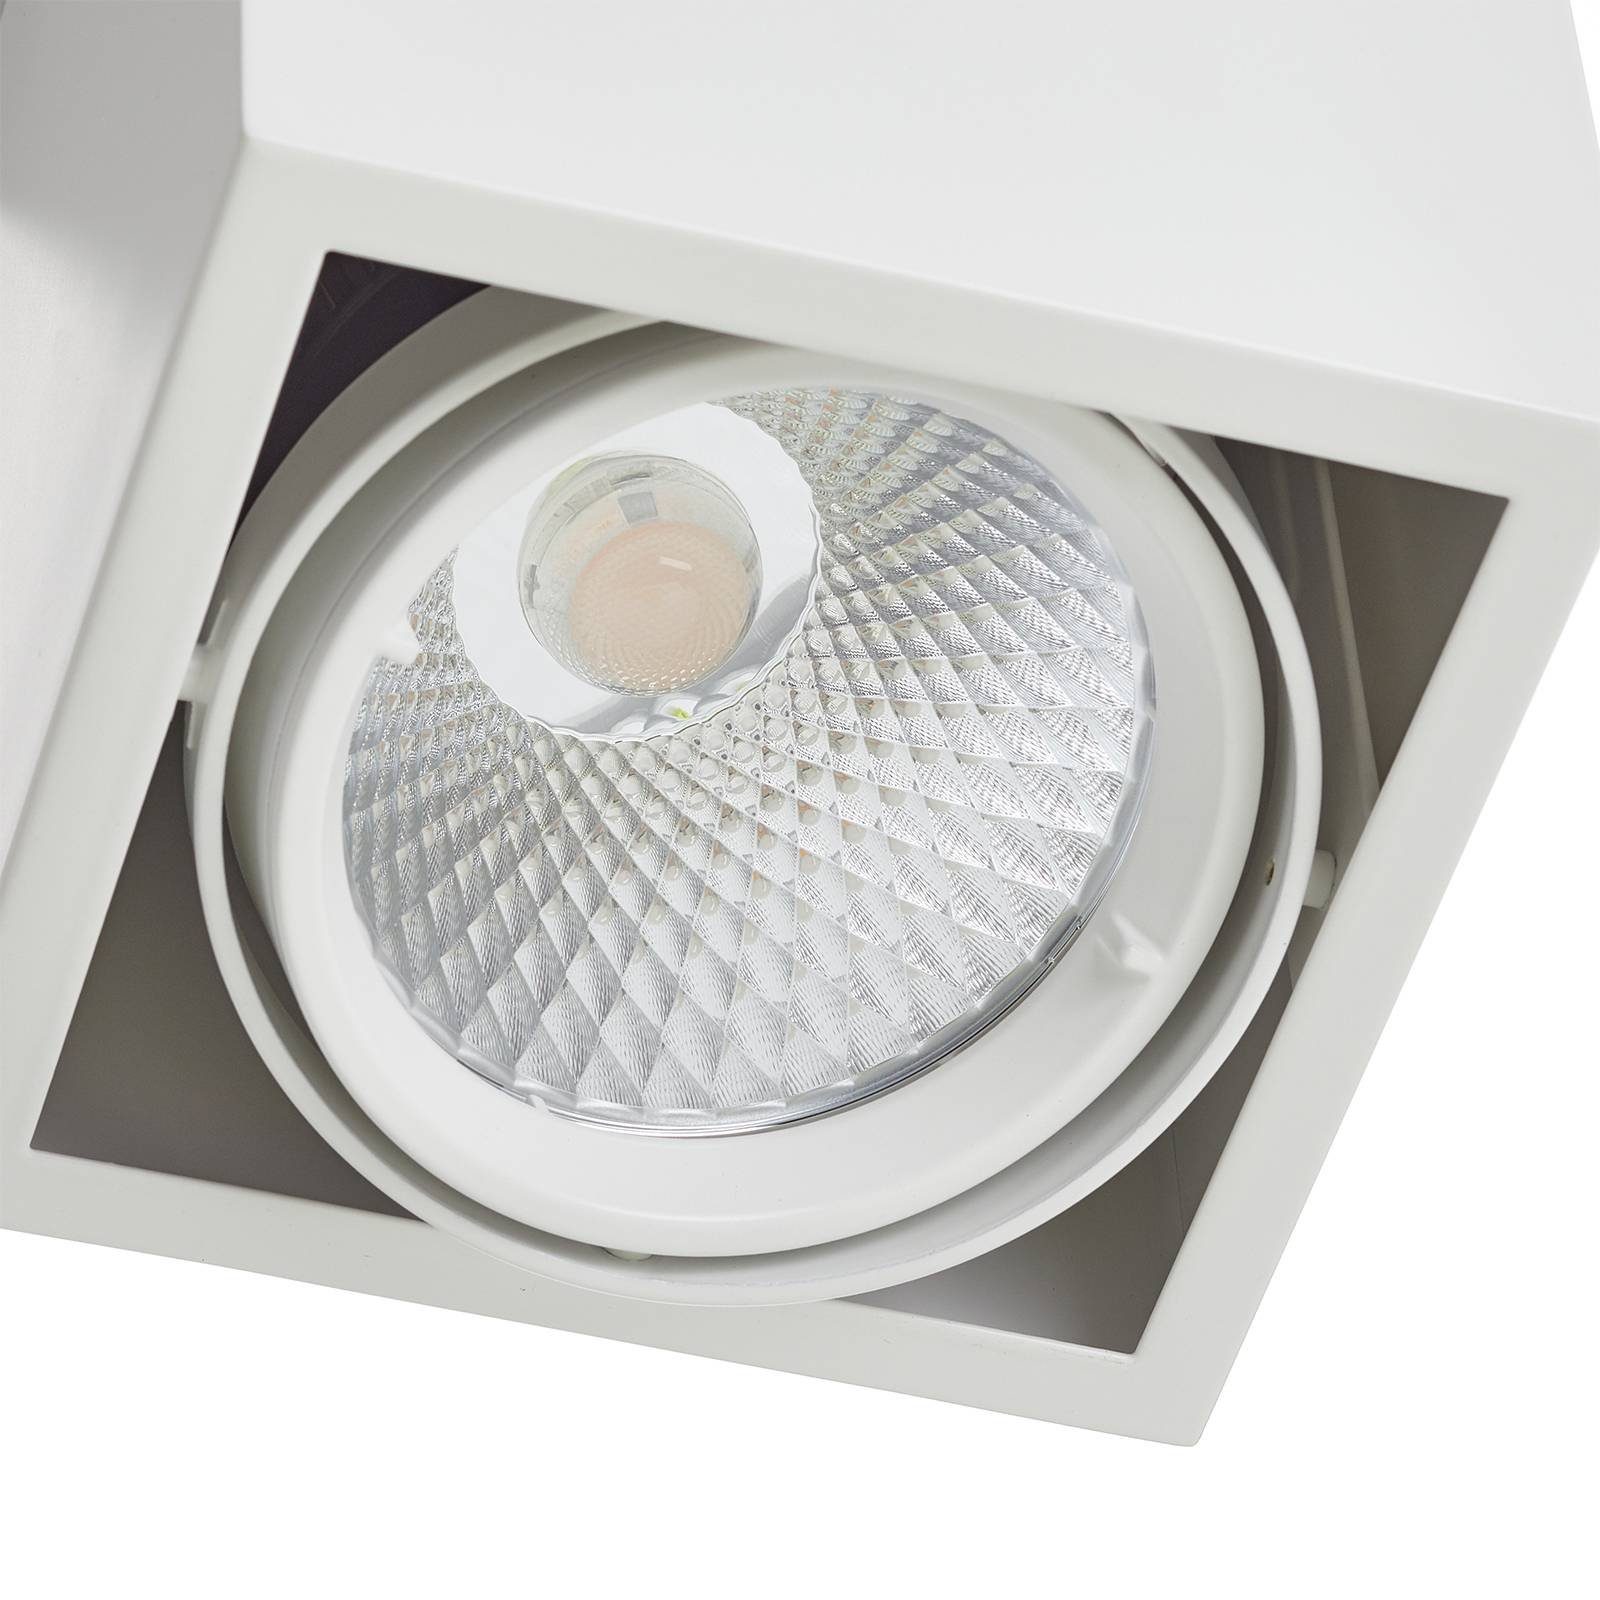 Cirdan, Lampe LED inkl. LED fest Arcchio verbaut, Deckenleuchte Aluminium, weiß, Leuchtmittel, Modern, warmweiß, Polycarbonat, LED-Leuchtmittel